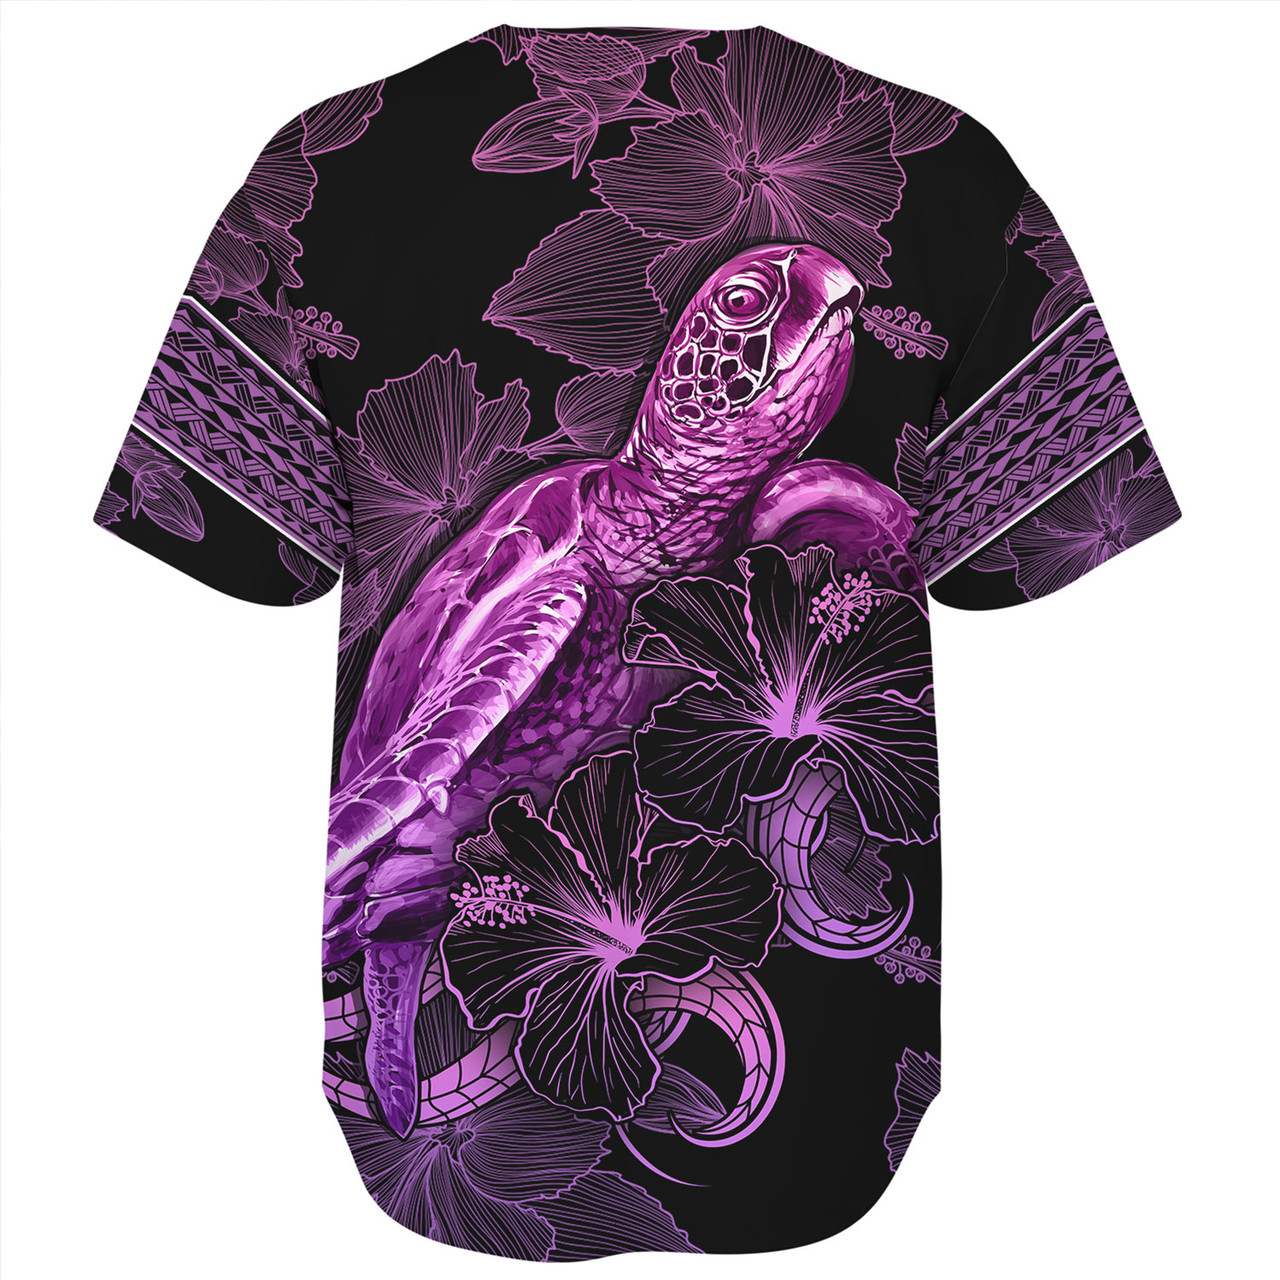 Austral Islands Baseball Shirt Sea Turtle With Blooming Hibiscus Flowers Tribal Purple